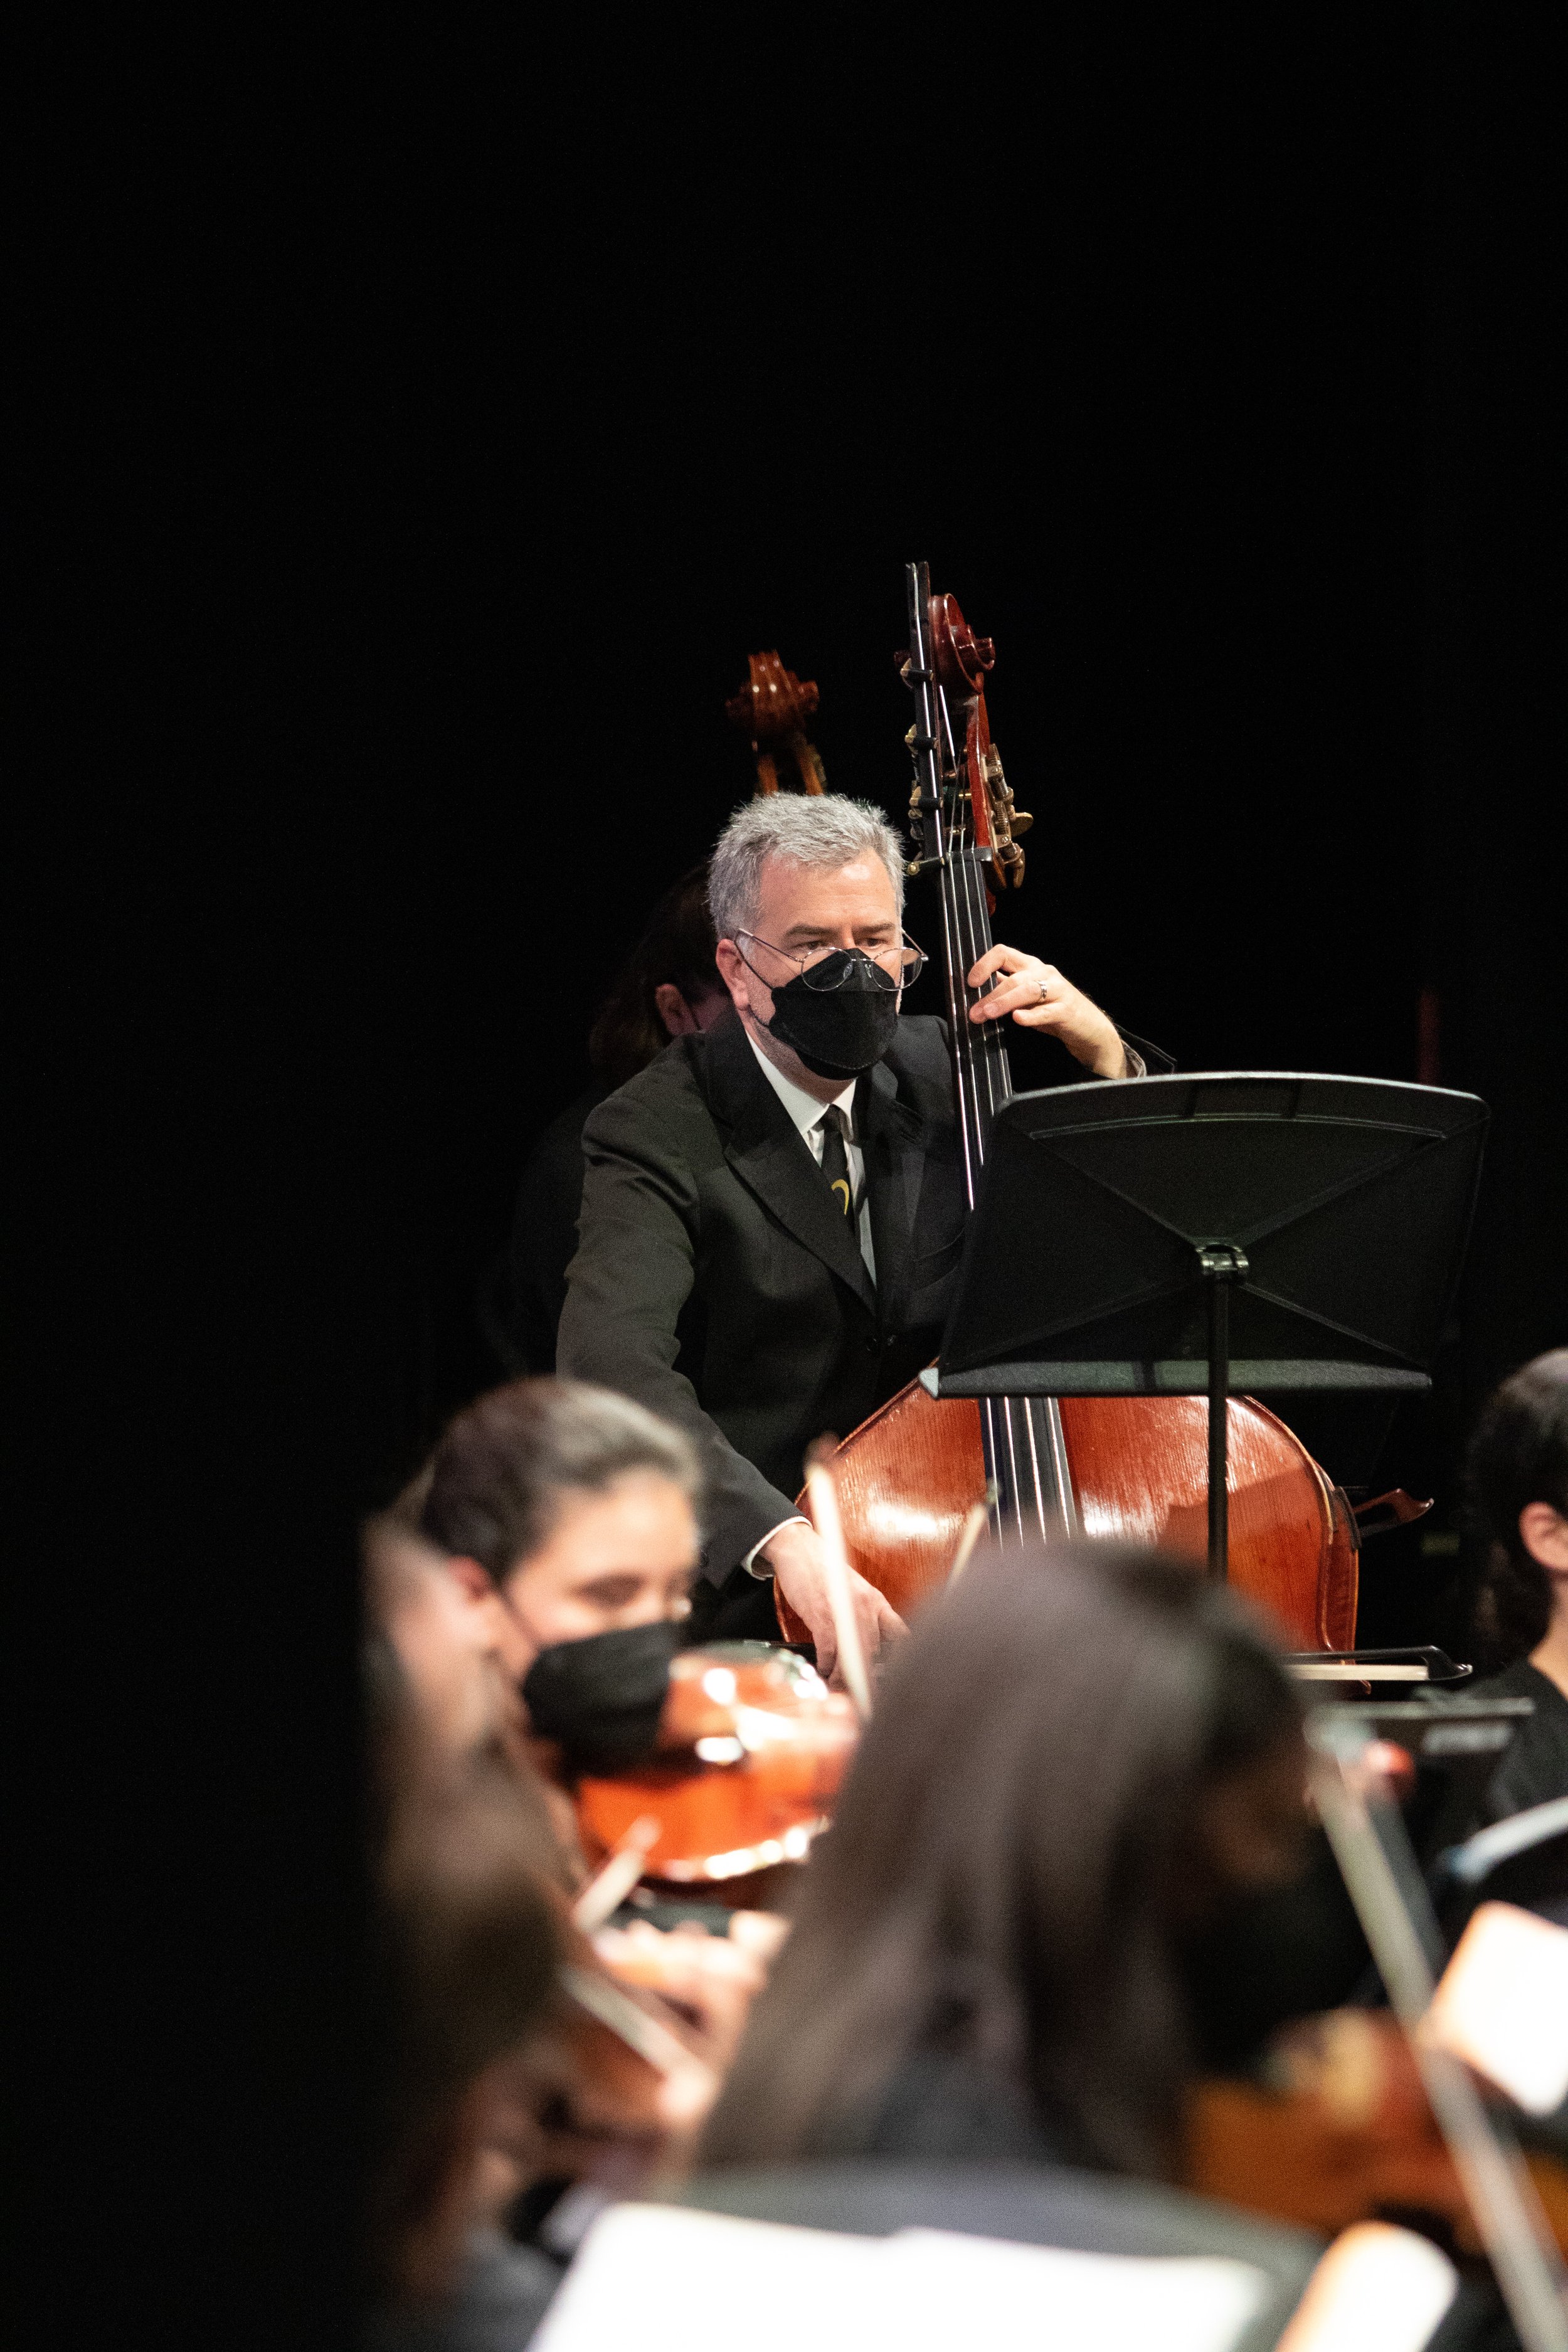  Bassist Jeff Schwartz performing during the Santa Monica Symphony Performance at the John Adams Middle School Auditorium in Santa Monica, California on March 27, 2022. (Ryan Martinez | The Corsair) 